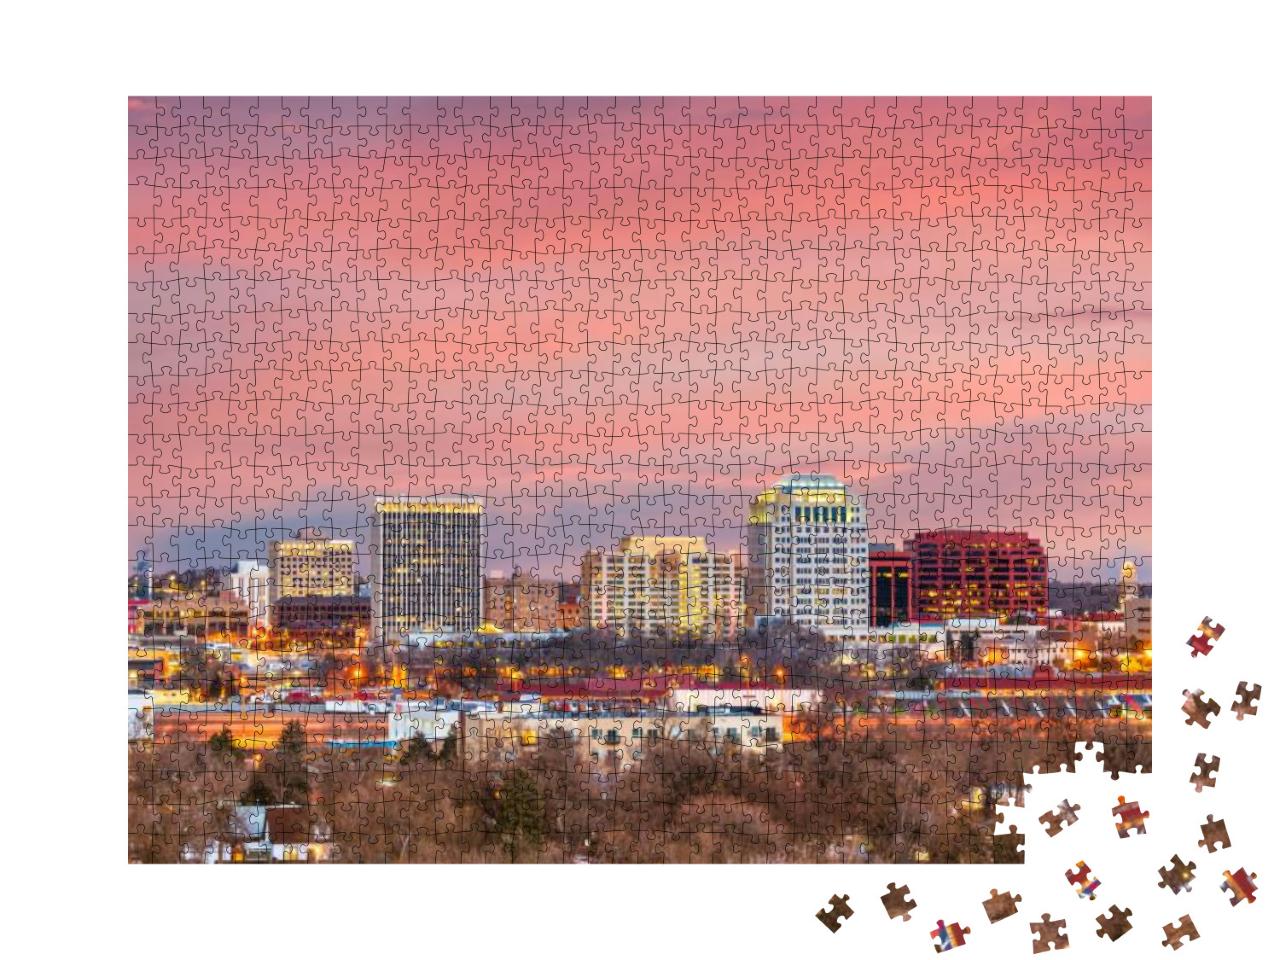 Colorado Springs, Colorado, USA Downtown City Skyline At D... Jigsaw Puzzle with 1000 pieces